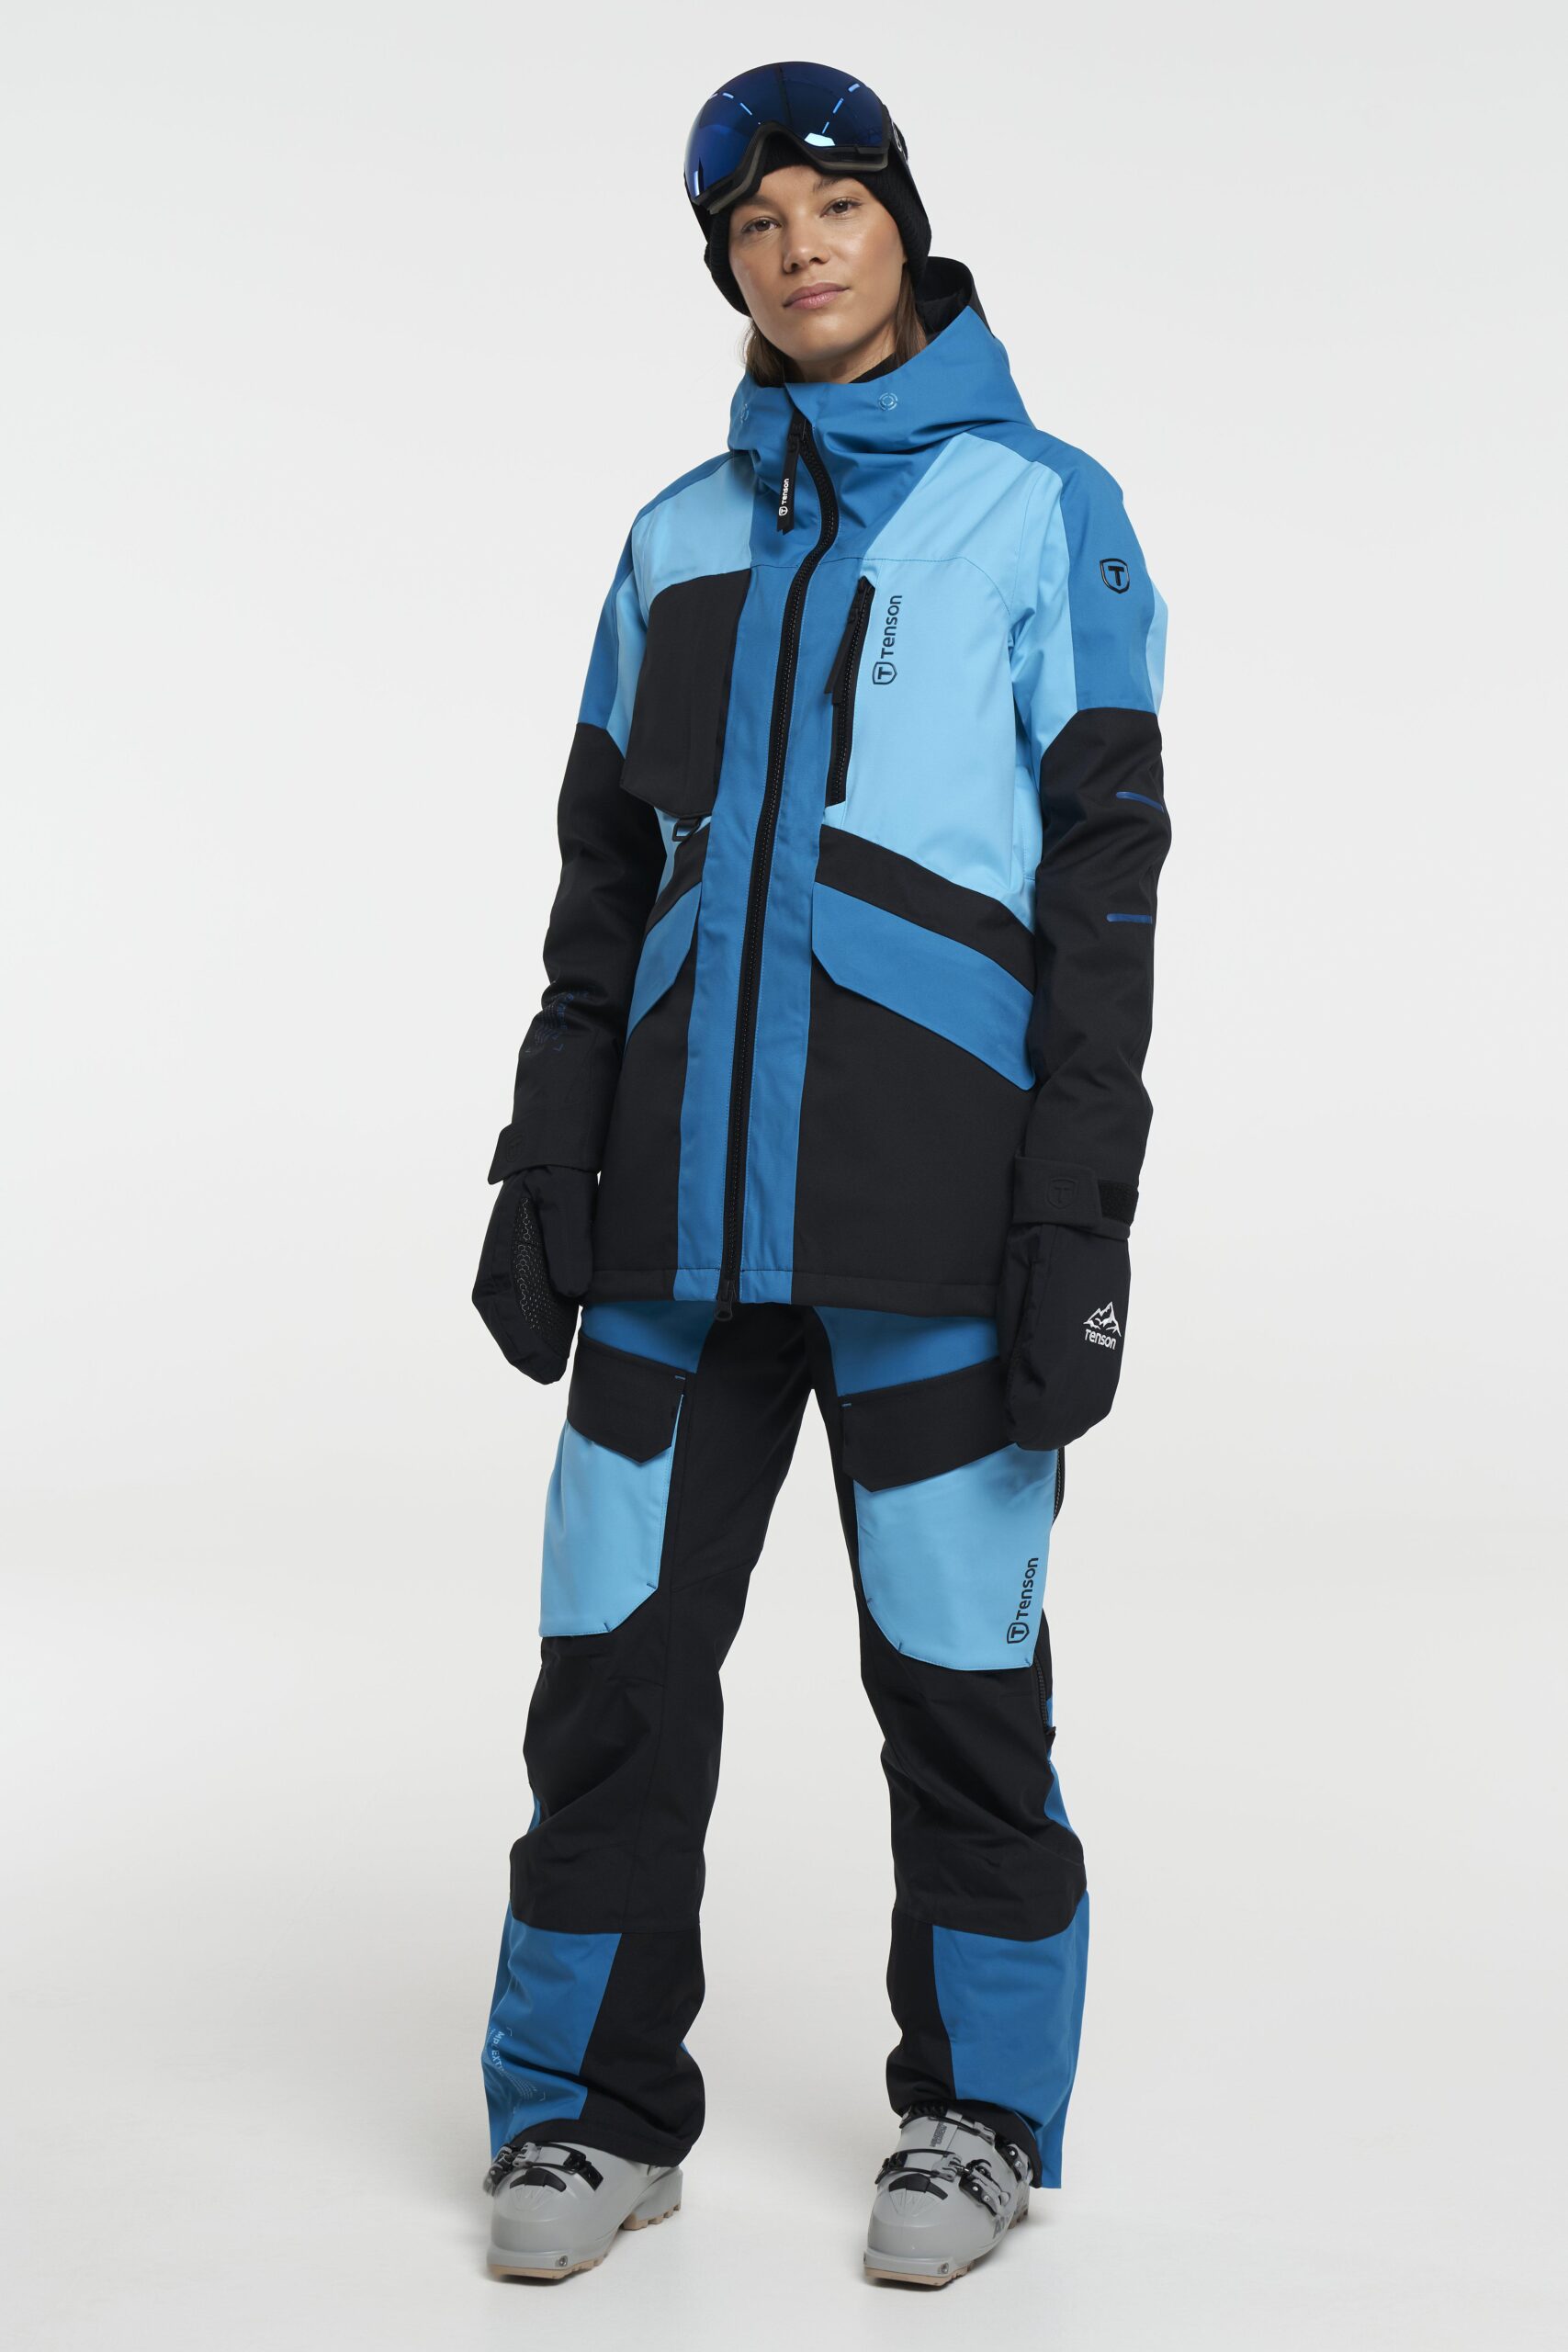 Tenson - Women’s Ski Jacket with Snow Skirt - Sphere - Tenson